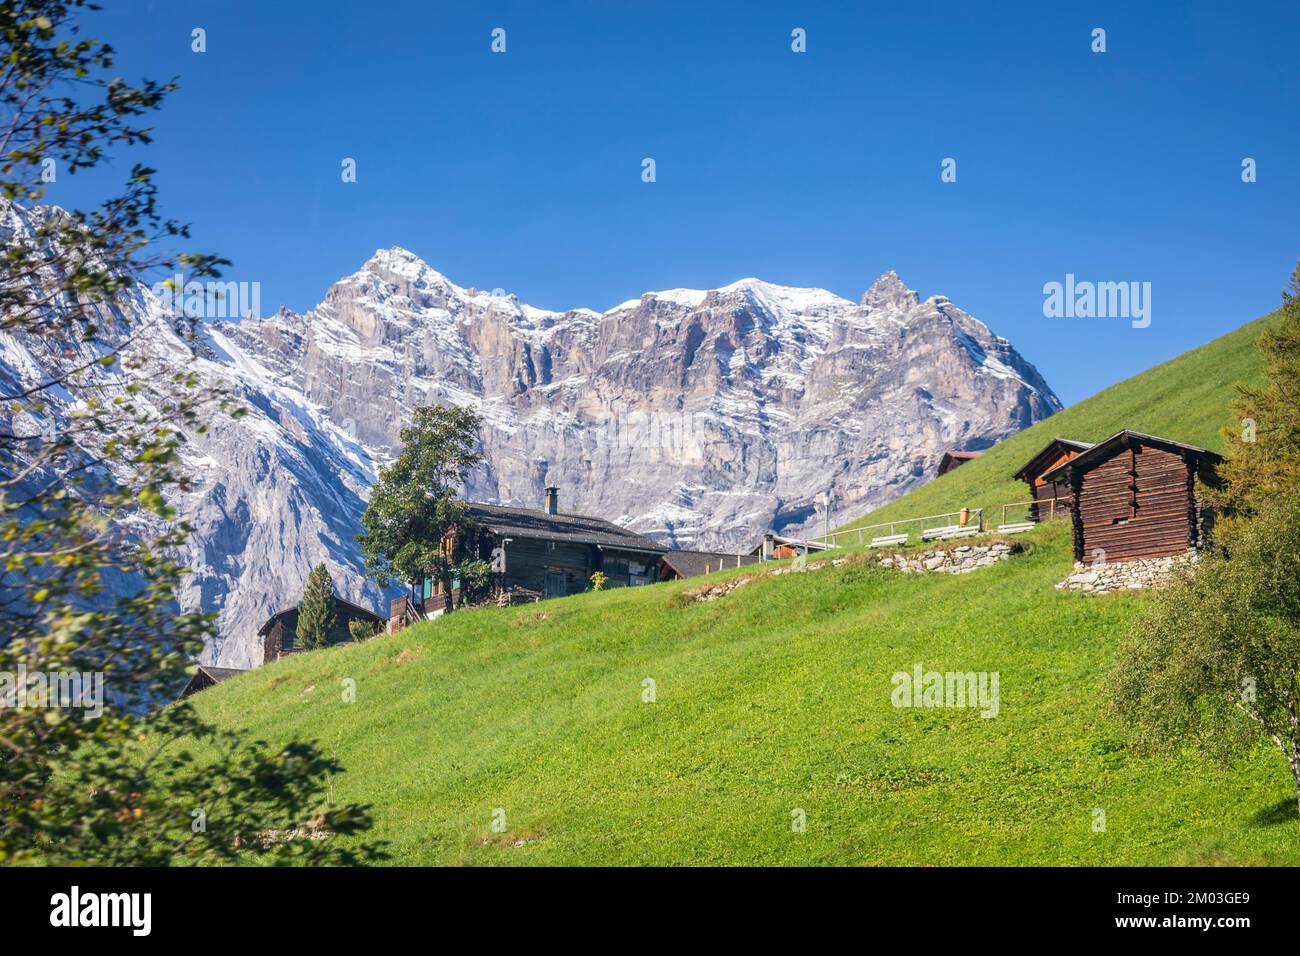 Alpi svizzere bernesi e fattorie alpine innevate, Svizzera Foto Stock